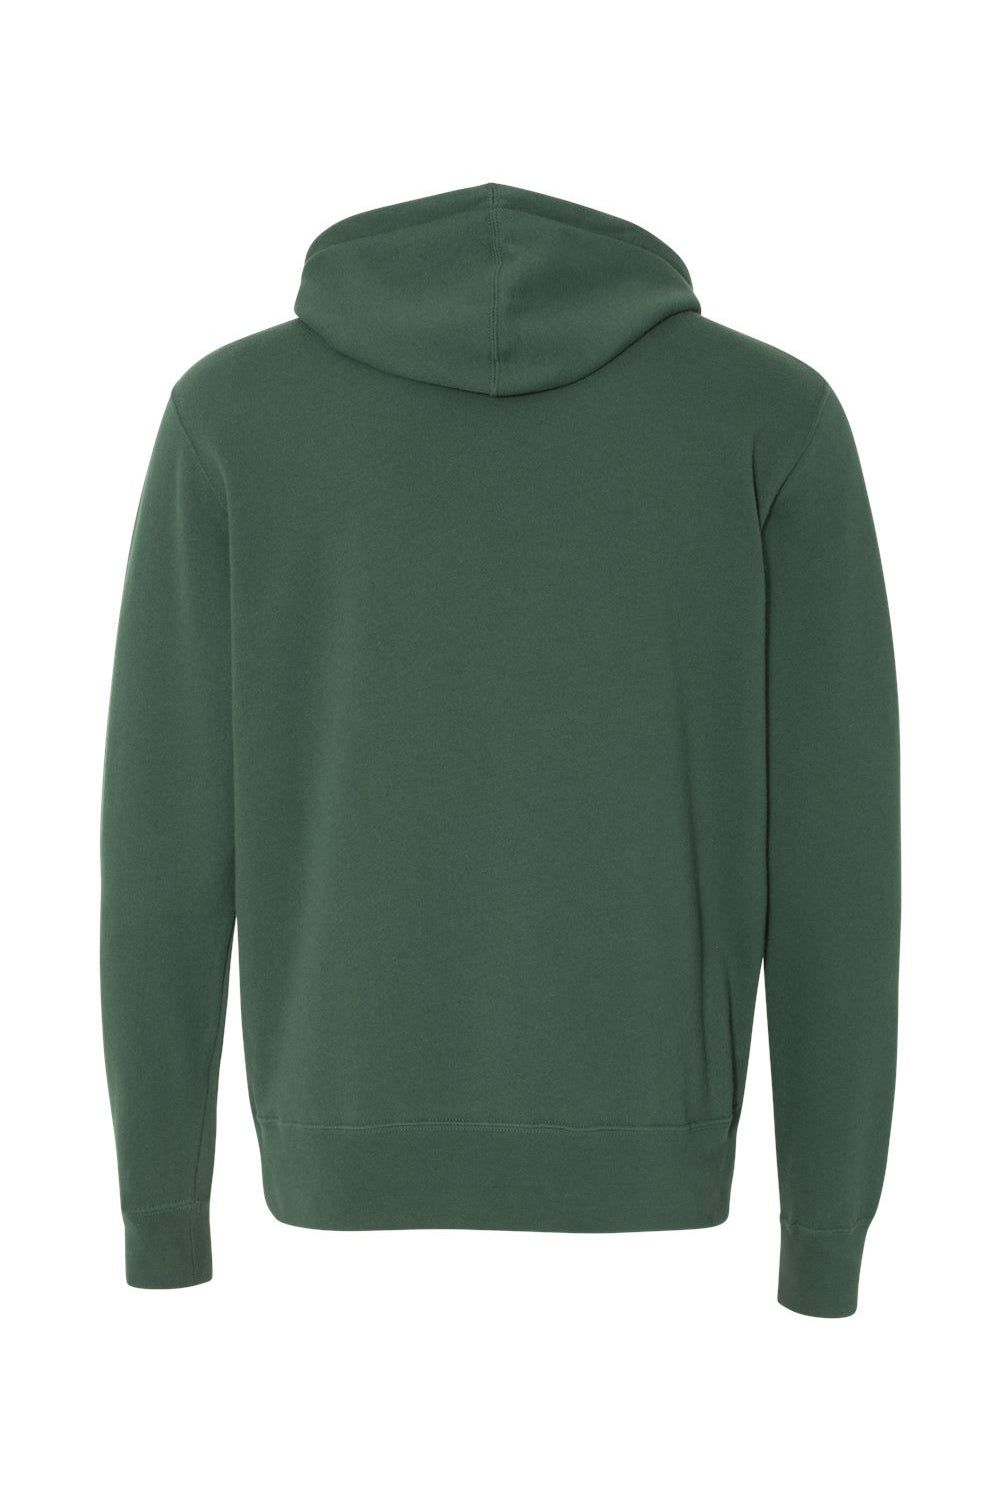 Independent Trading Co. AFX90UNZ Mens Full Zip Hooded Sweatshirt Hoodie Alpine Green Flat Back